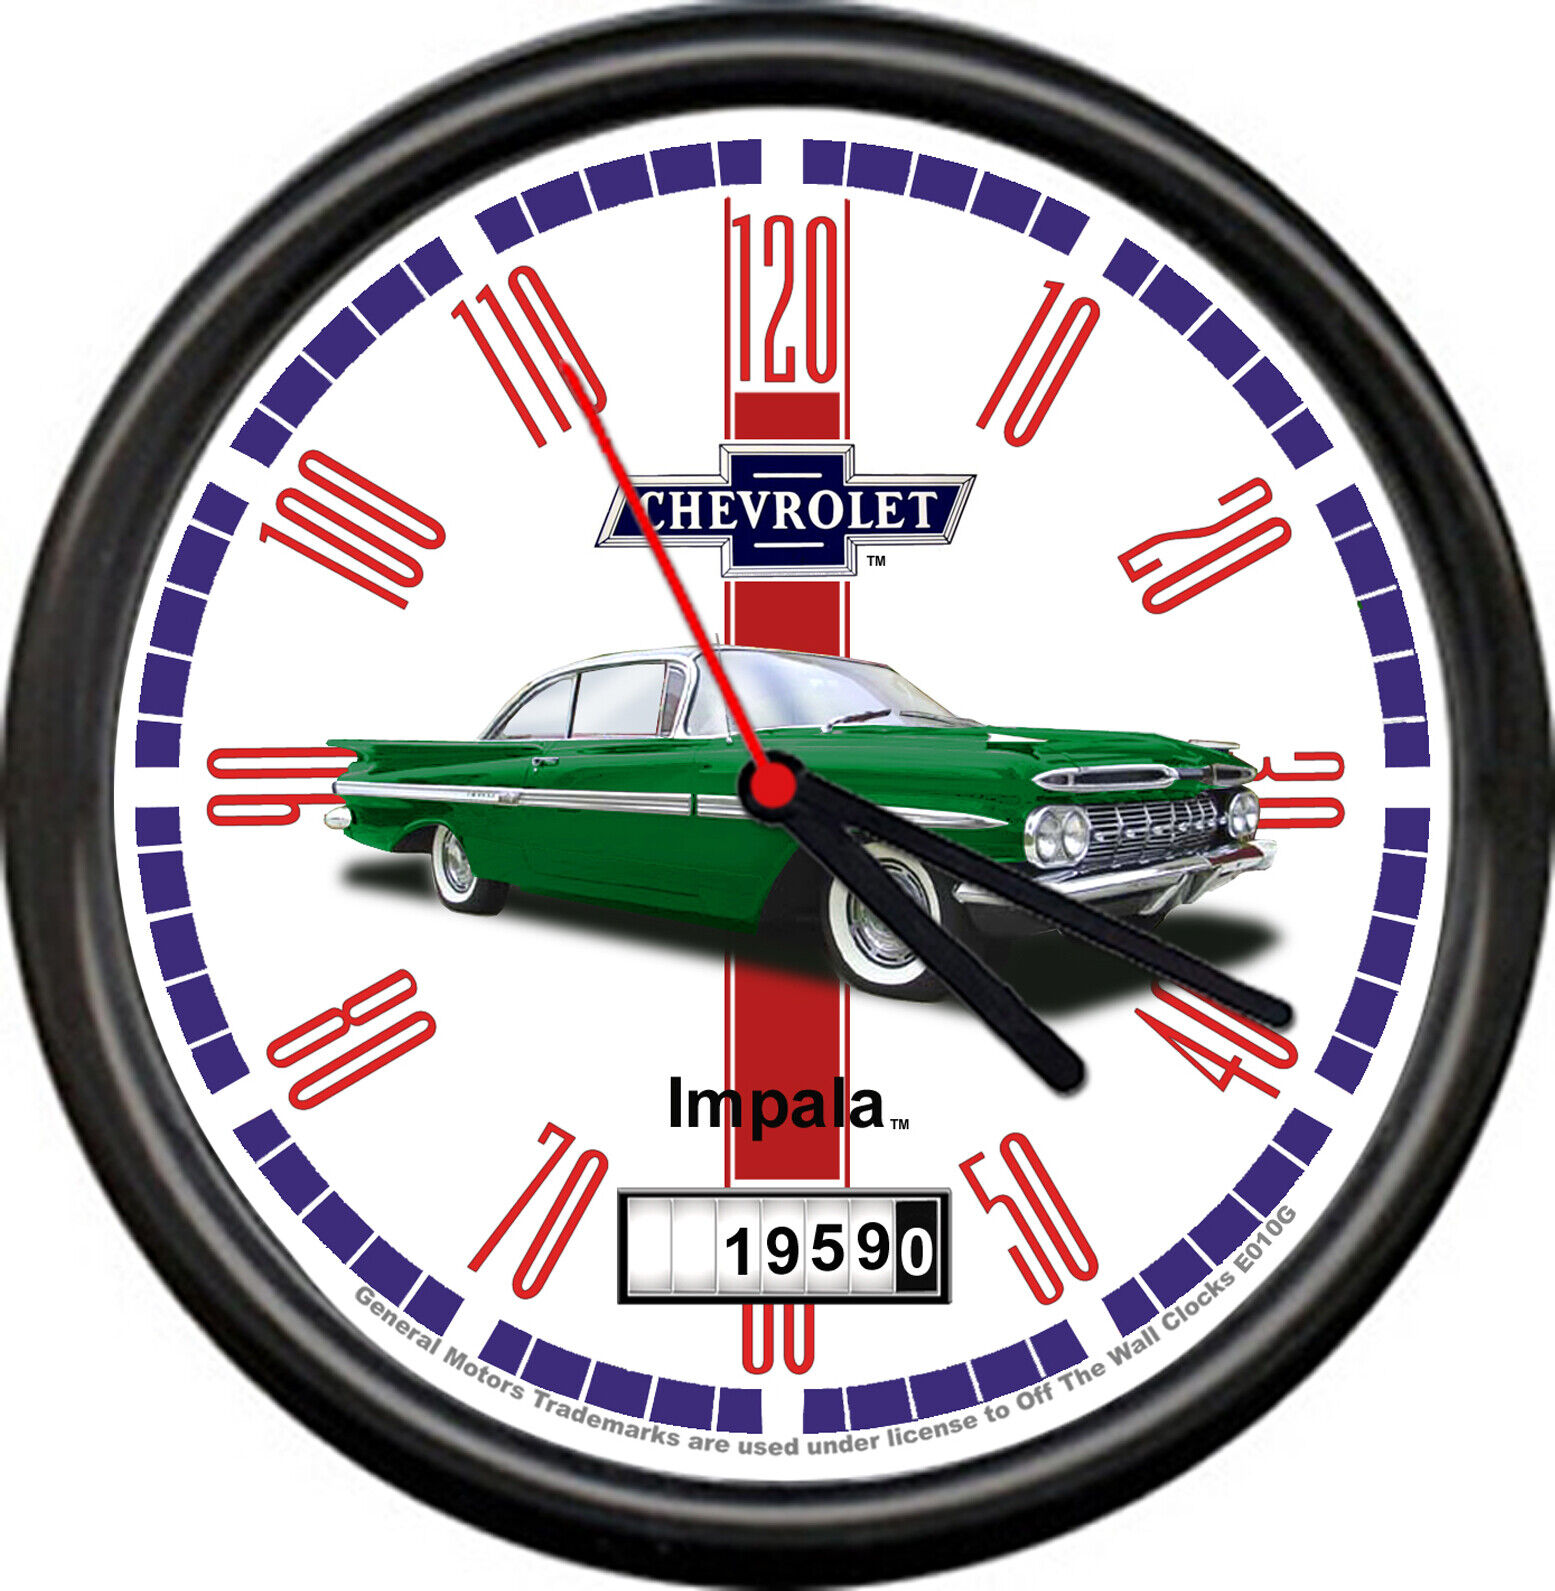 Licensed 1959 Impala Green 2 Door Sedan Chevrolet General Motors Sign Wall Clock